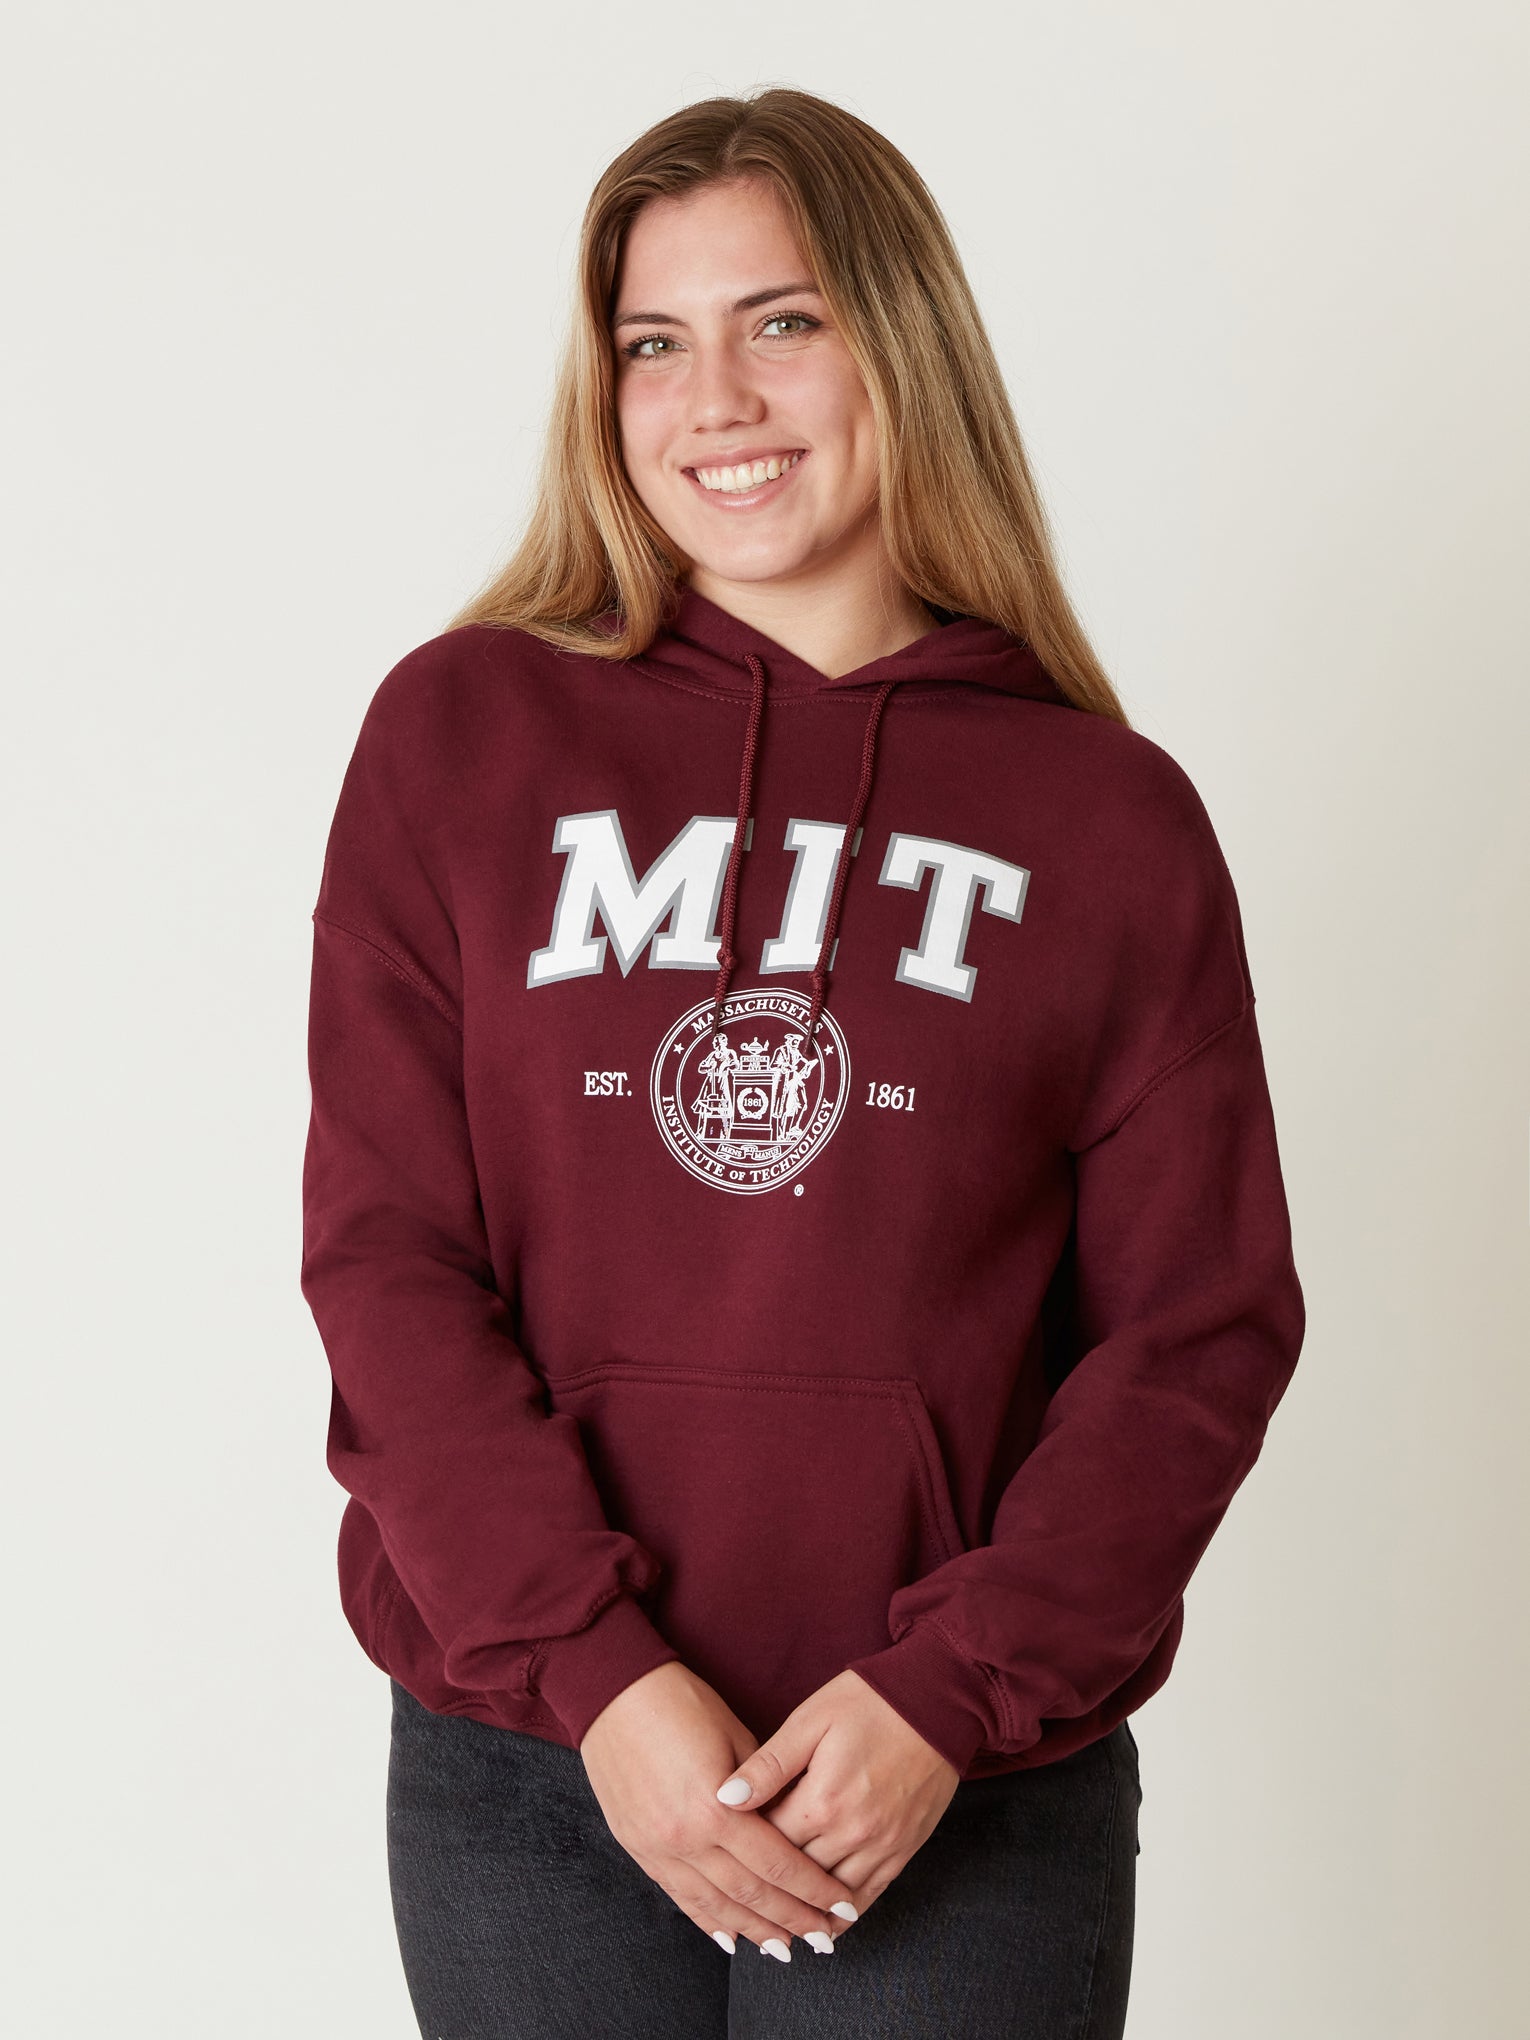 MIT Hooded Sweatshirt